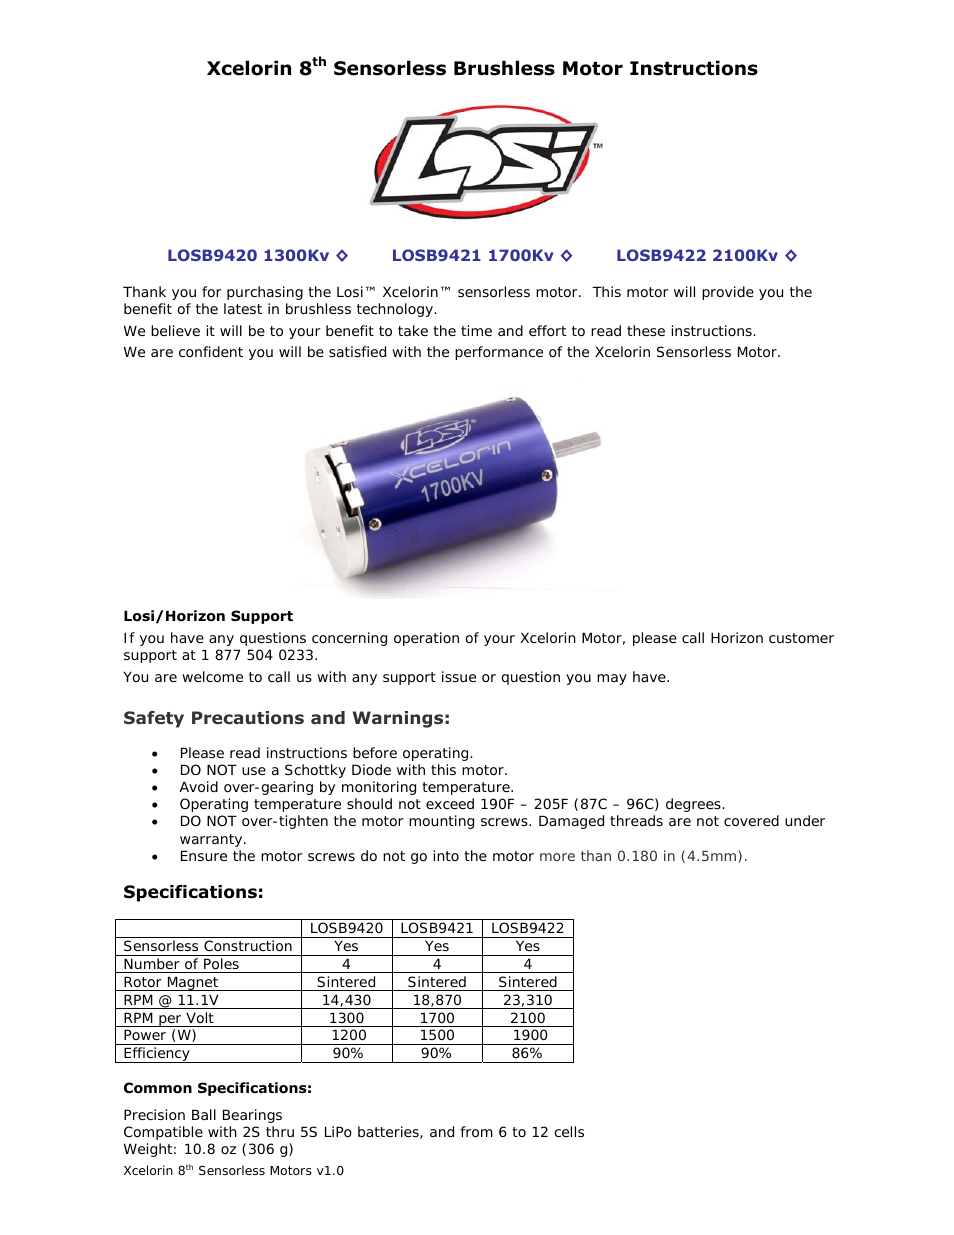 LOSB9558 1/8 Xcelorin Brushless Motor Manual